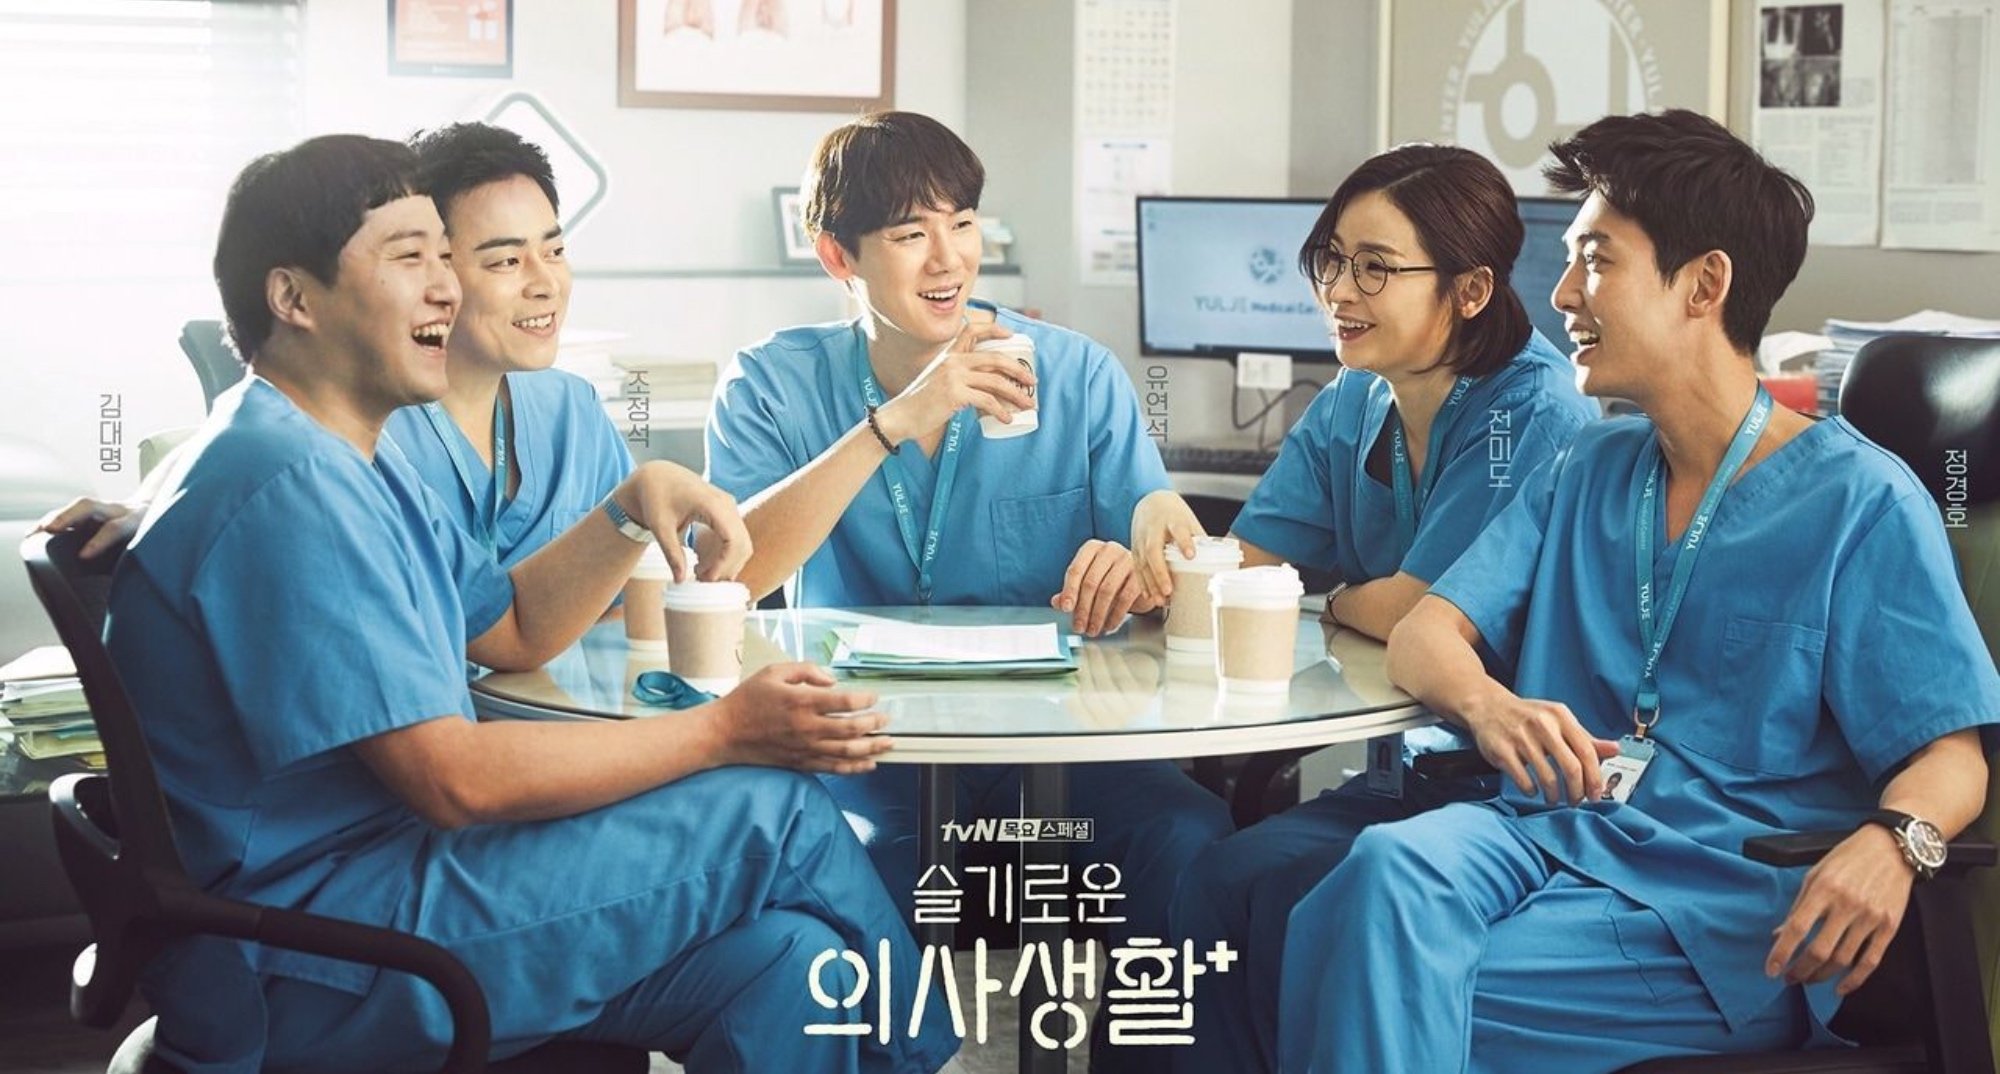 'Hospital Playlist' main cast poster wearing scrubs in relation to season 3.